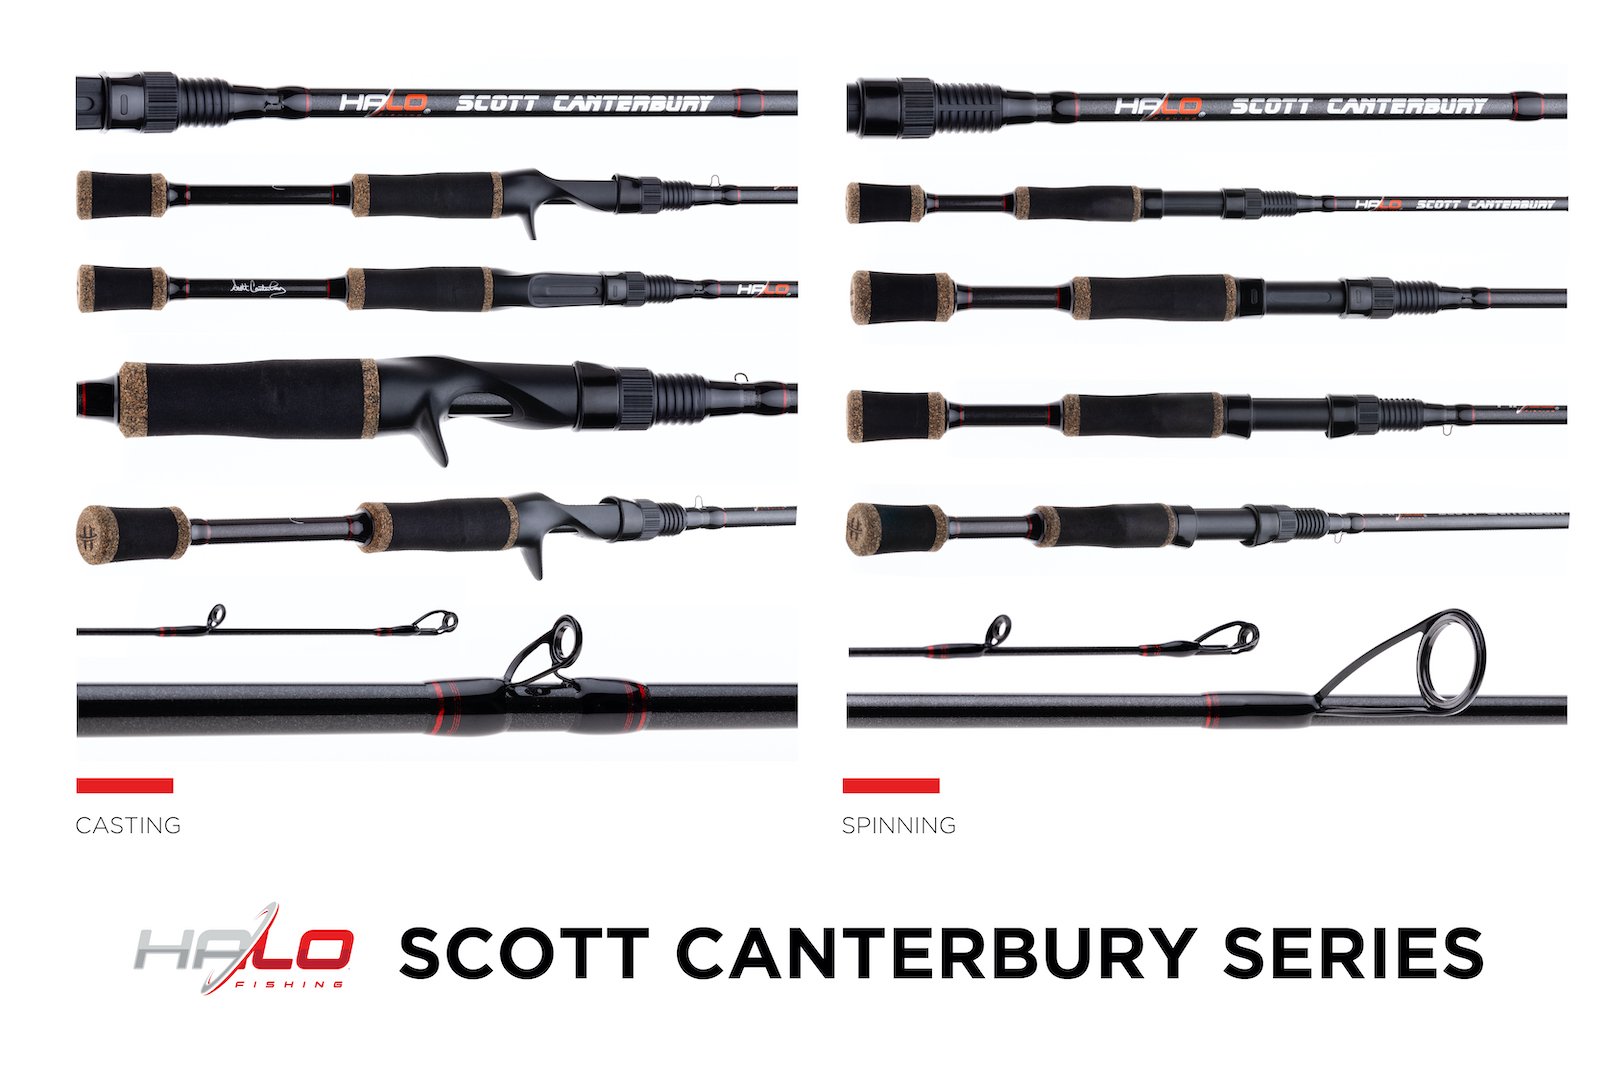 Scott Canterbury Casts His New Signature Series of Halo Fishing